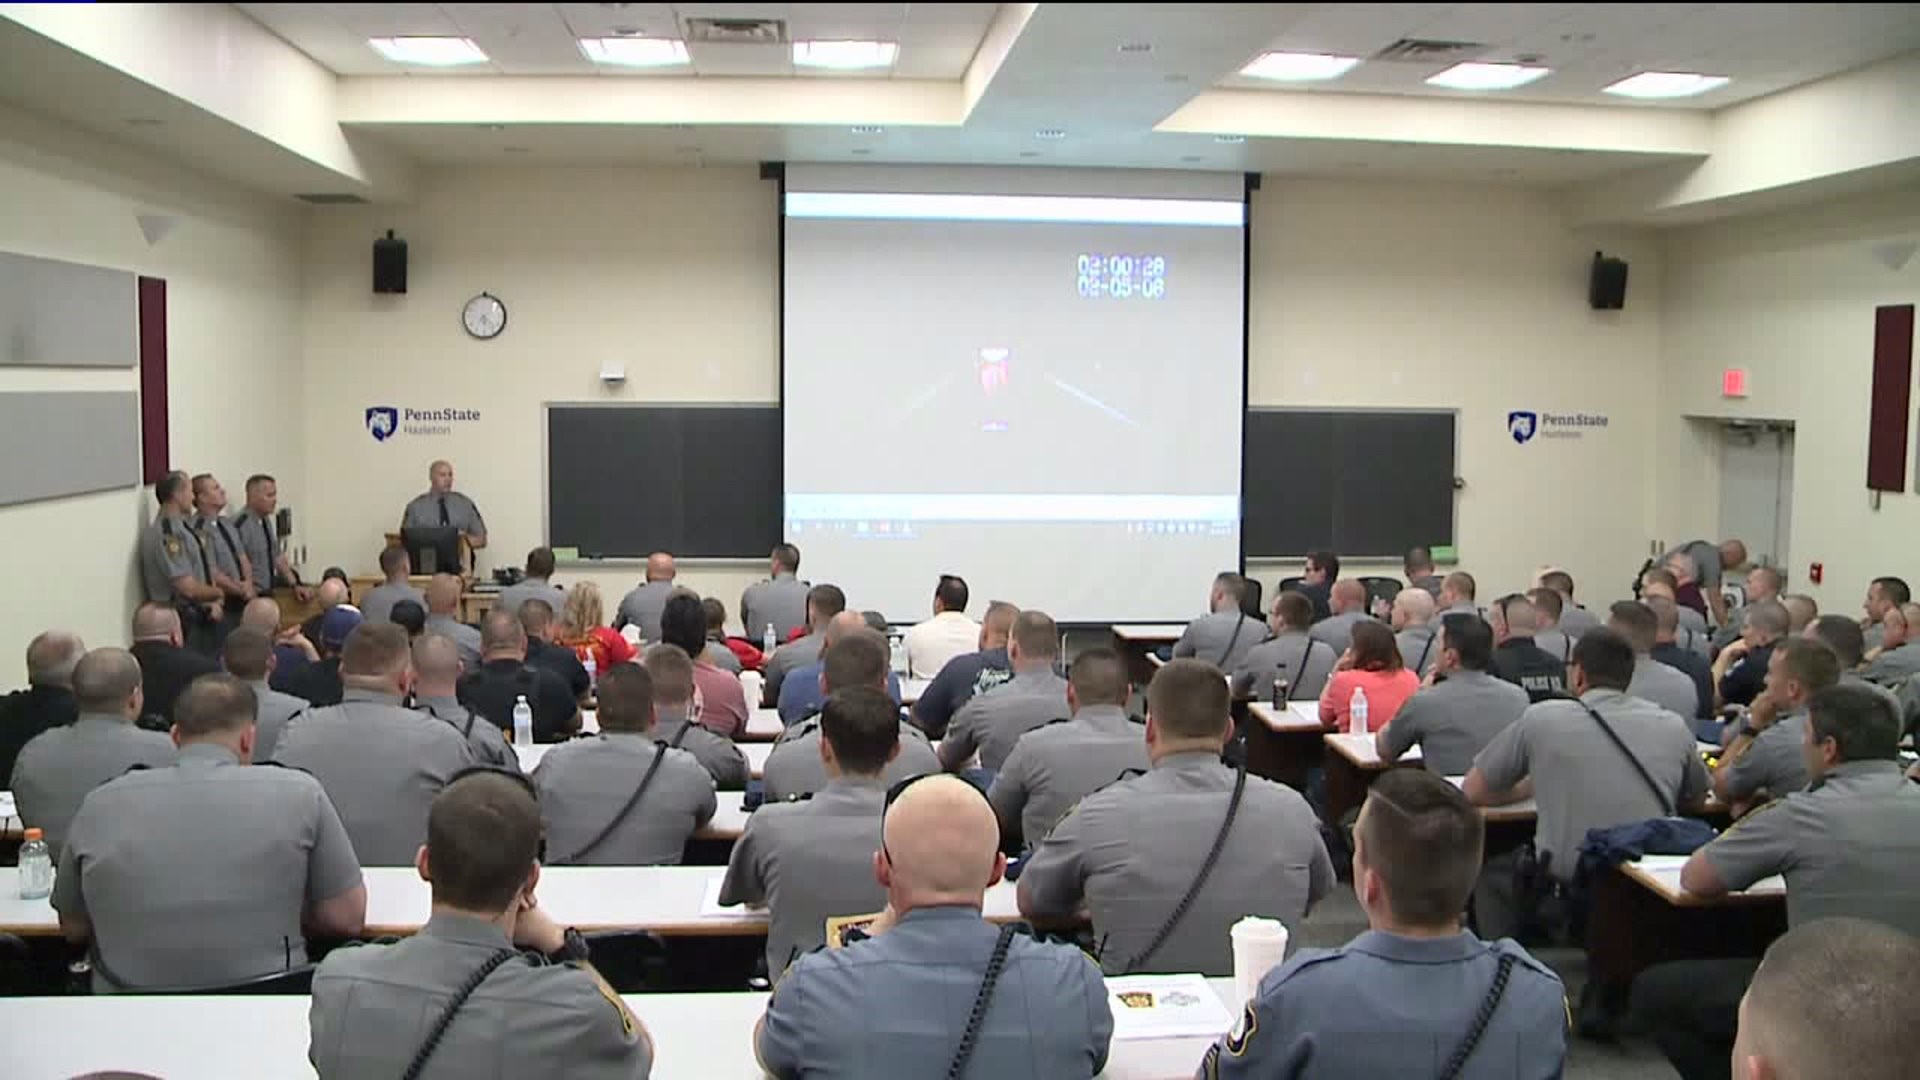 Police Honor Fallen Trooper at DUI Enforcement Class